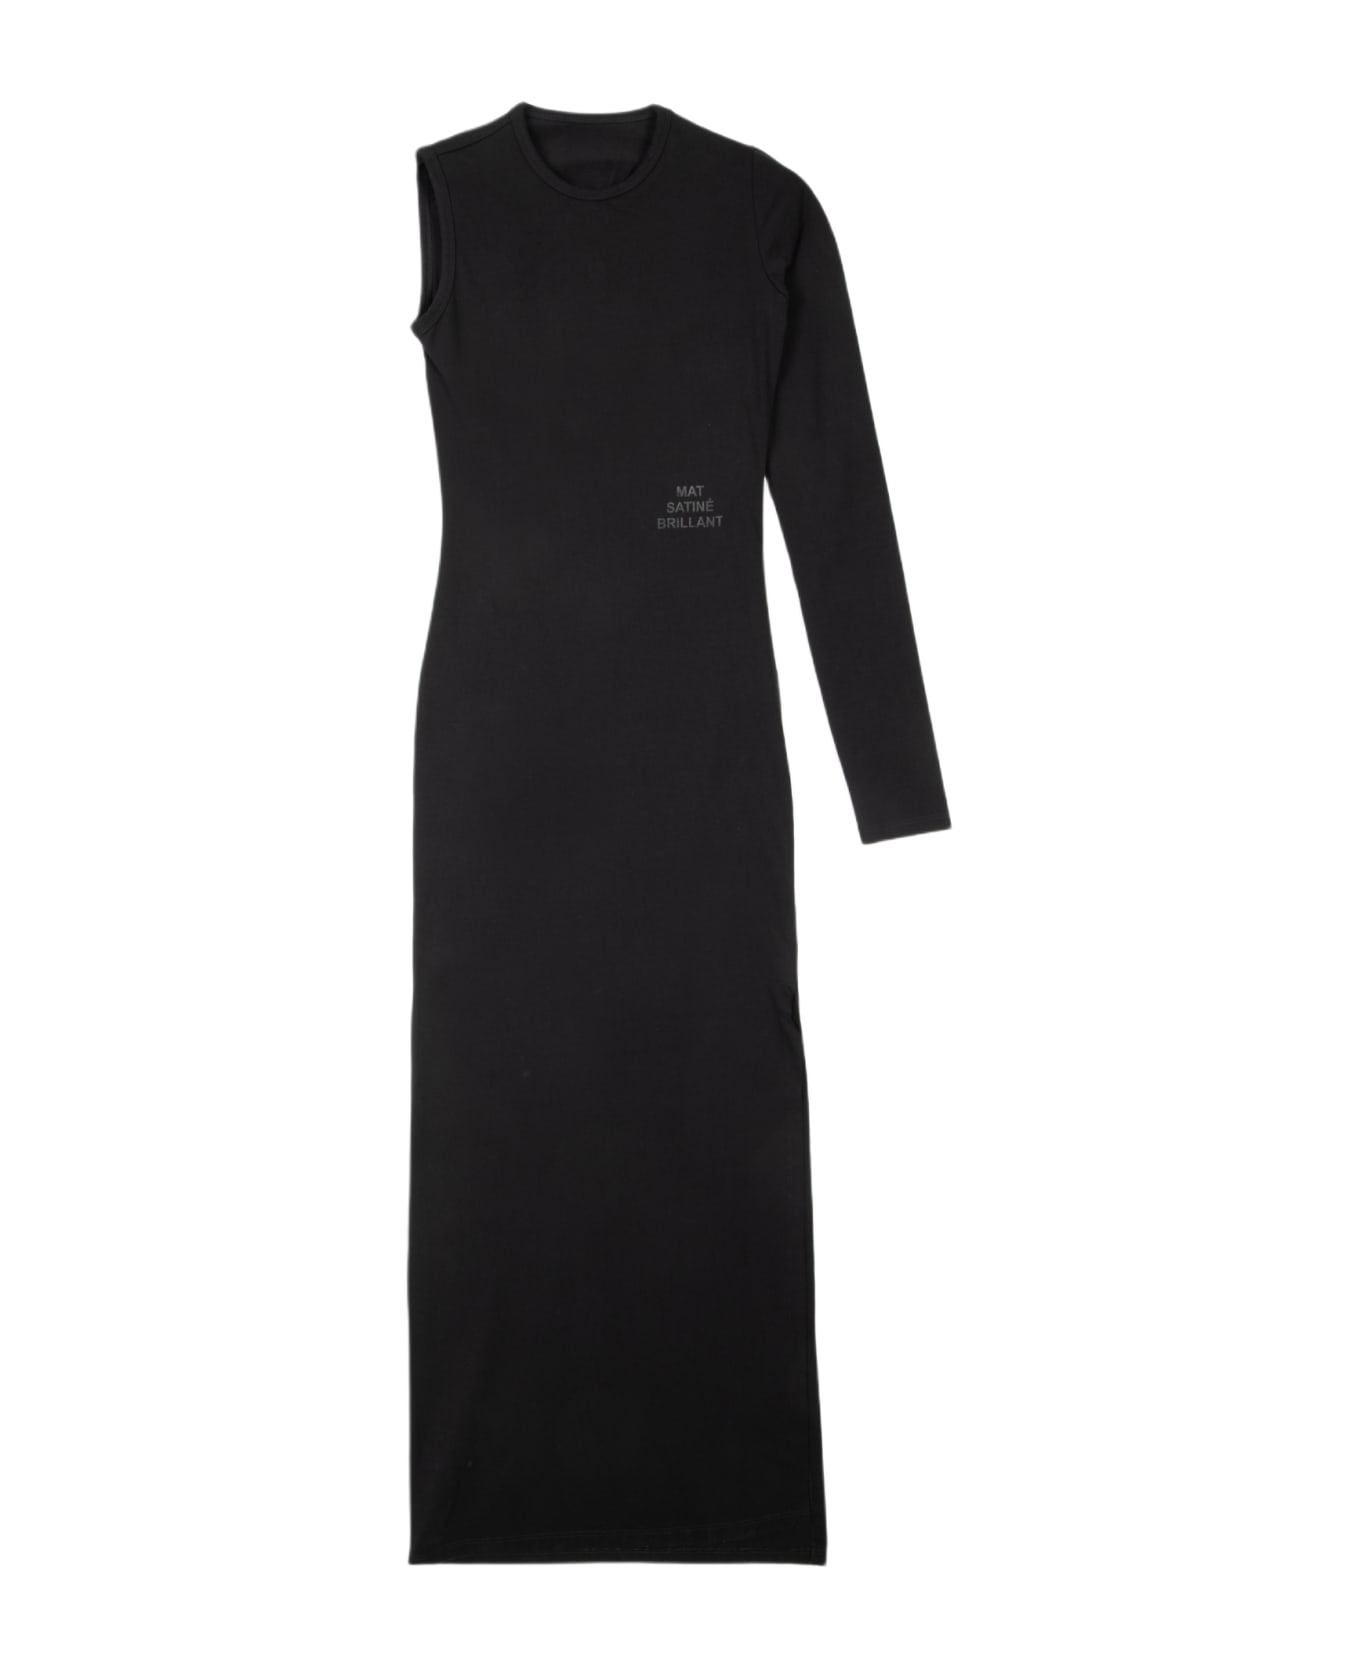 MM6 Maison Margiela Abito Midi Black cotton long dress with single sleeve - Nero